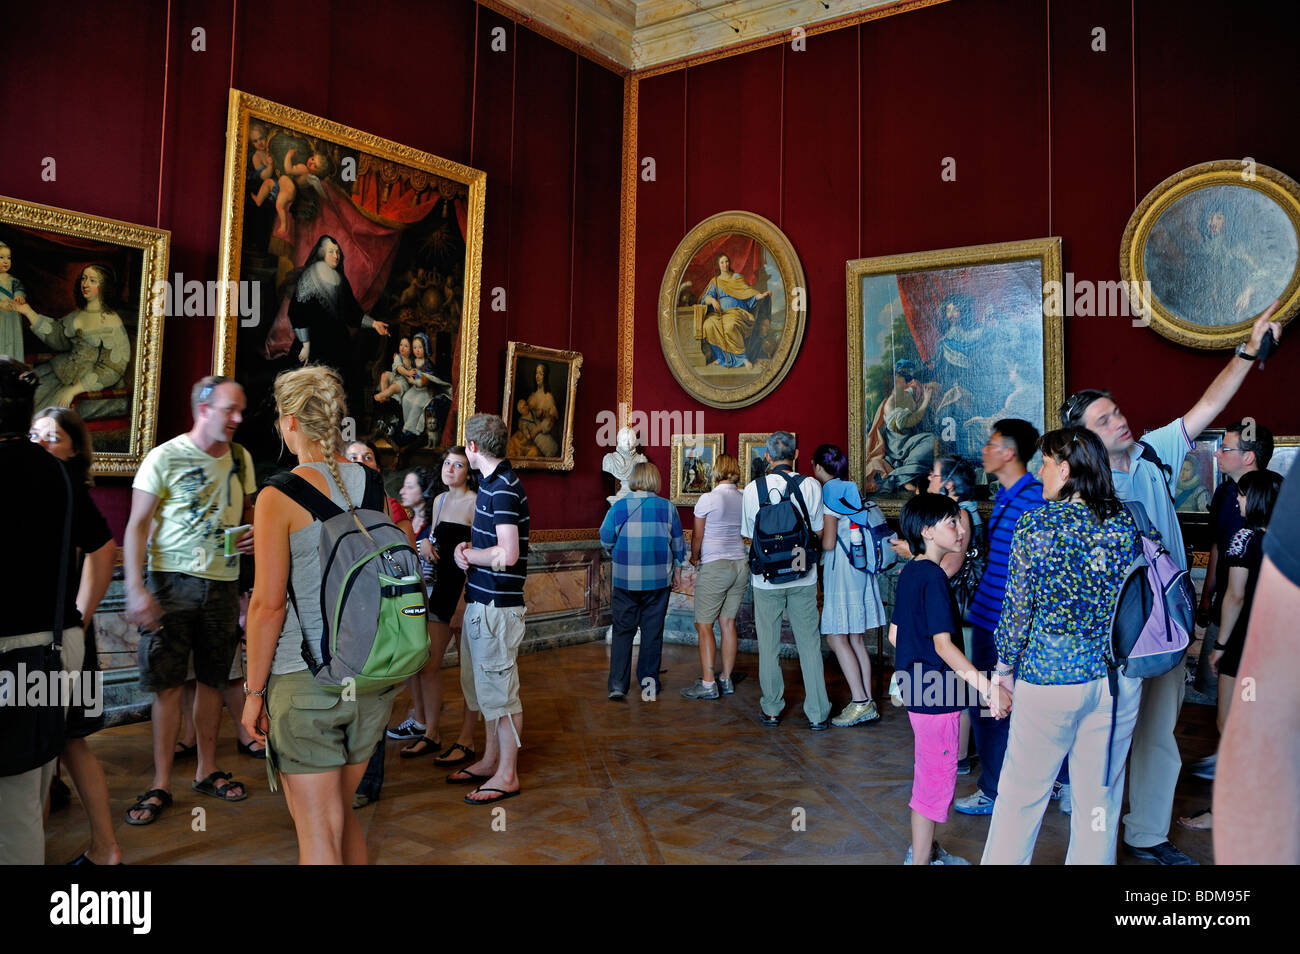 Paris, France - Crowd Tourist Families, Visiting French Monument, 'Chateau de Versailles', inside Art Gallery, Royal Apartments, Palace of Versailles, Stock Photo